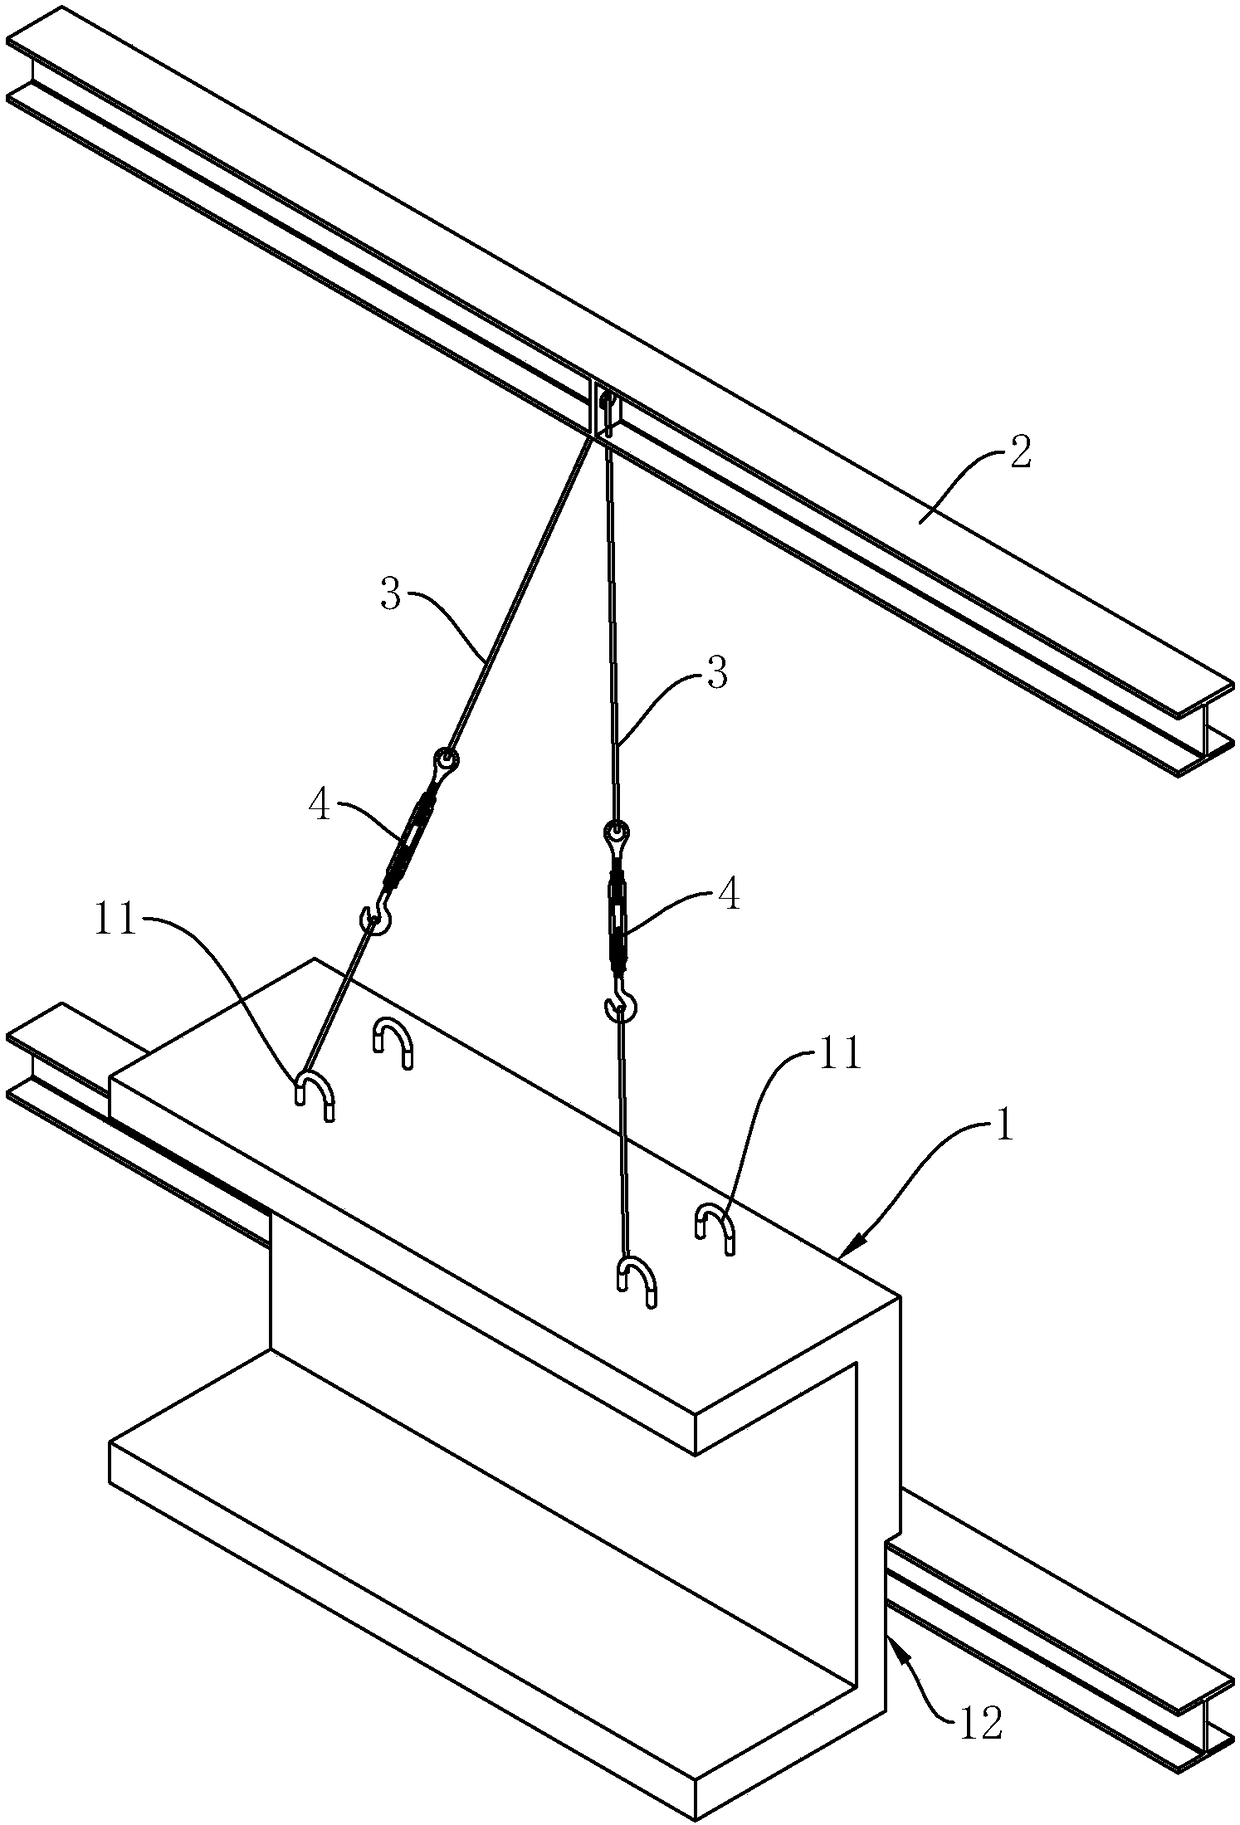 Construction method for assembled building cantilevered element